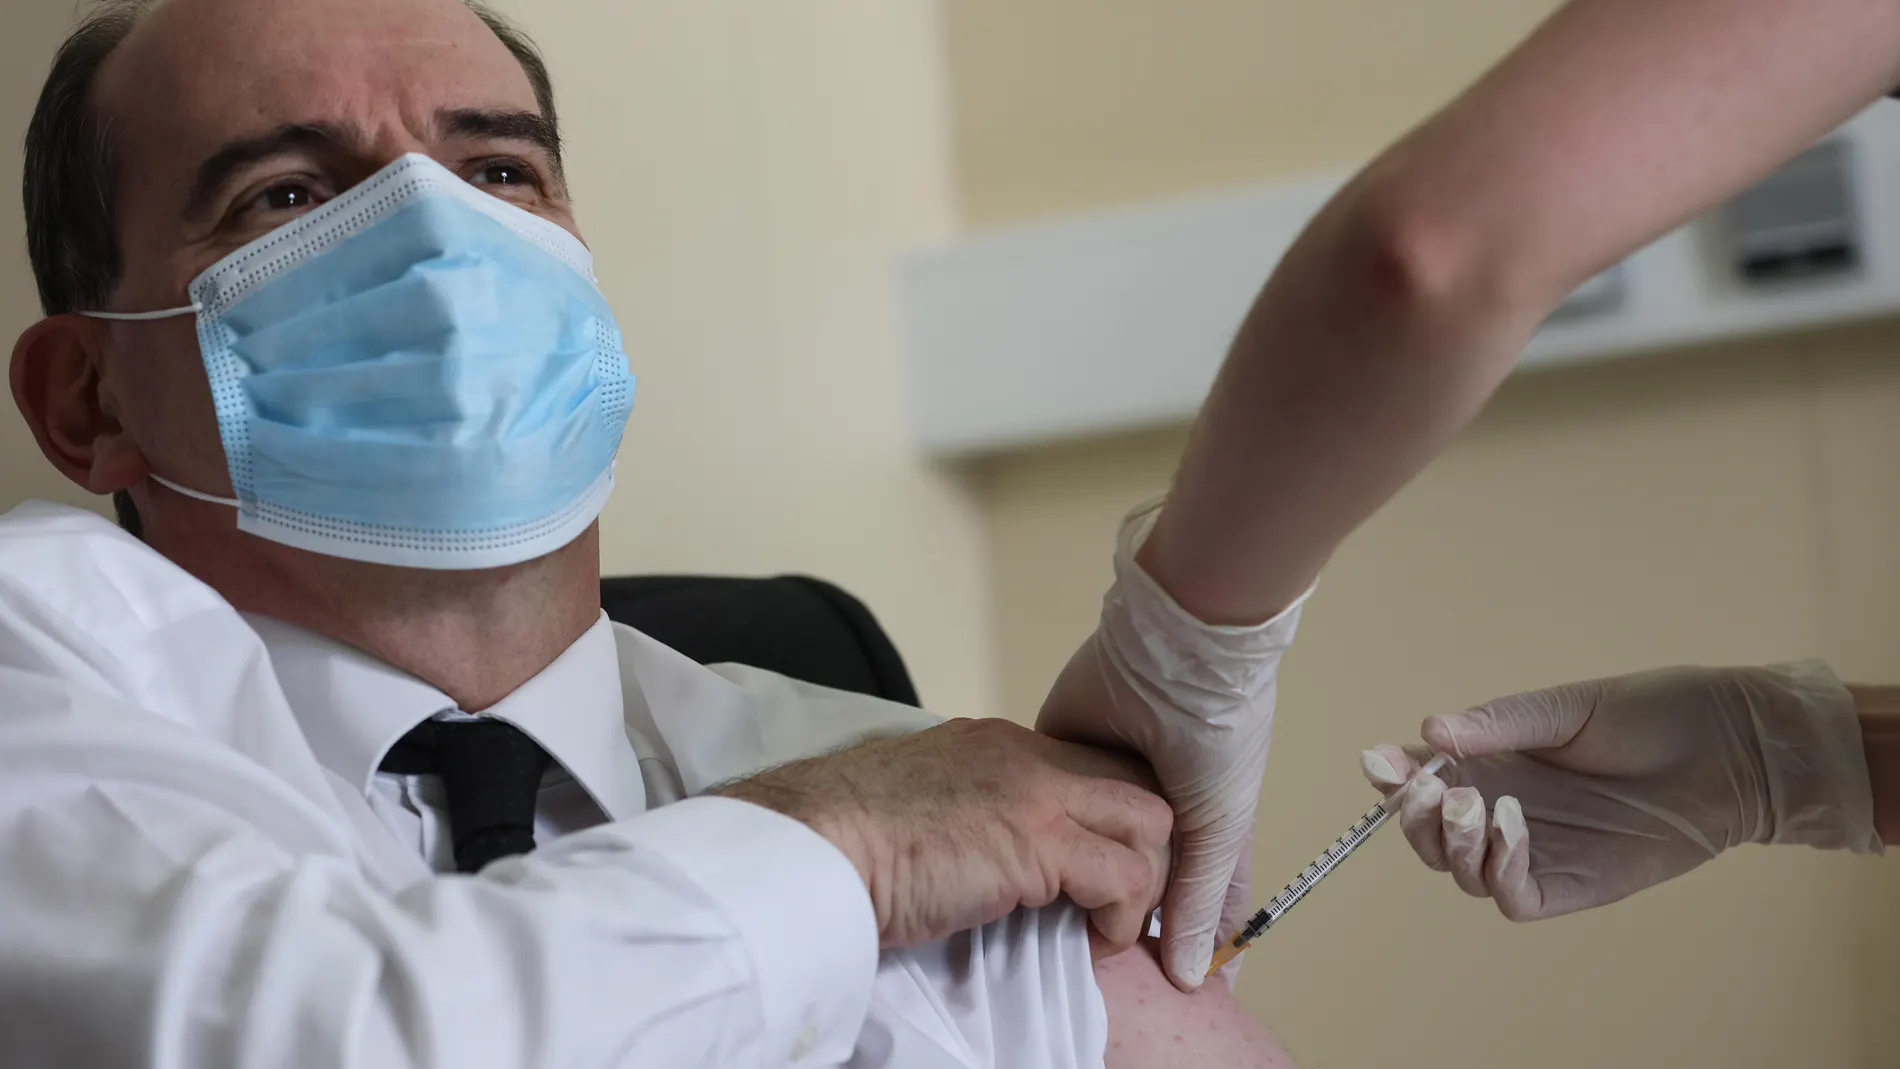 El primer ministro de Francia, Jean Castex, recibe la vacuna de AstraZeneca contra la Covid-19